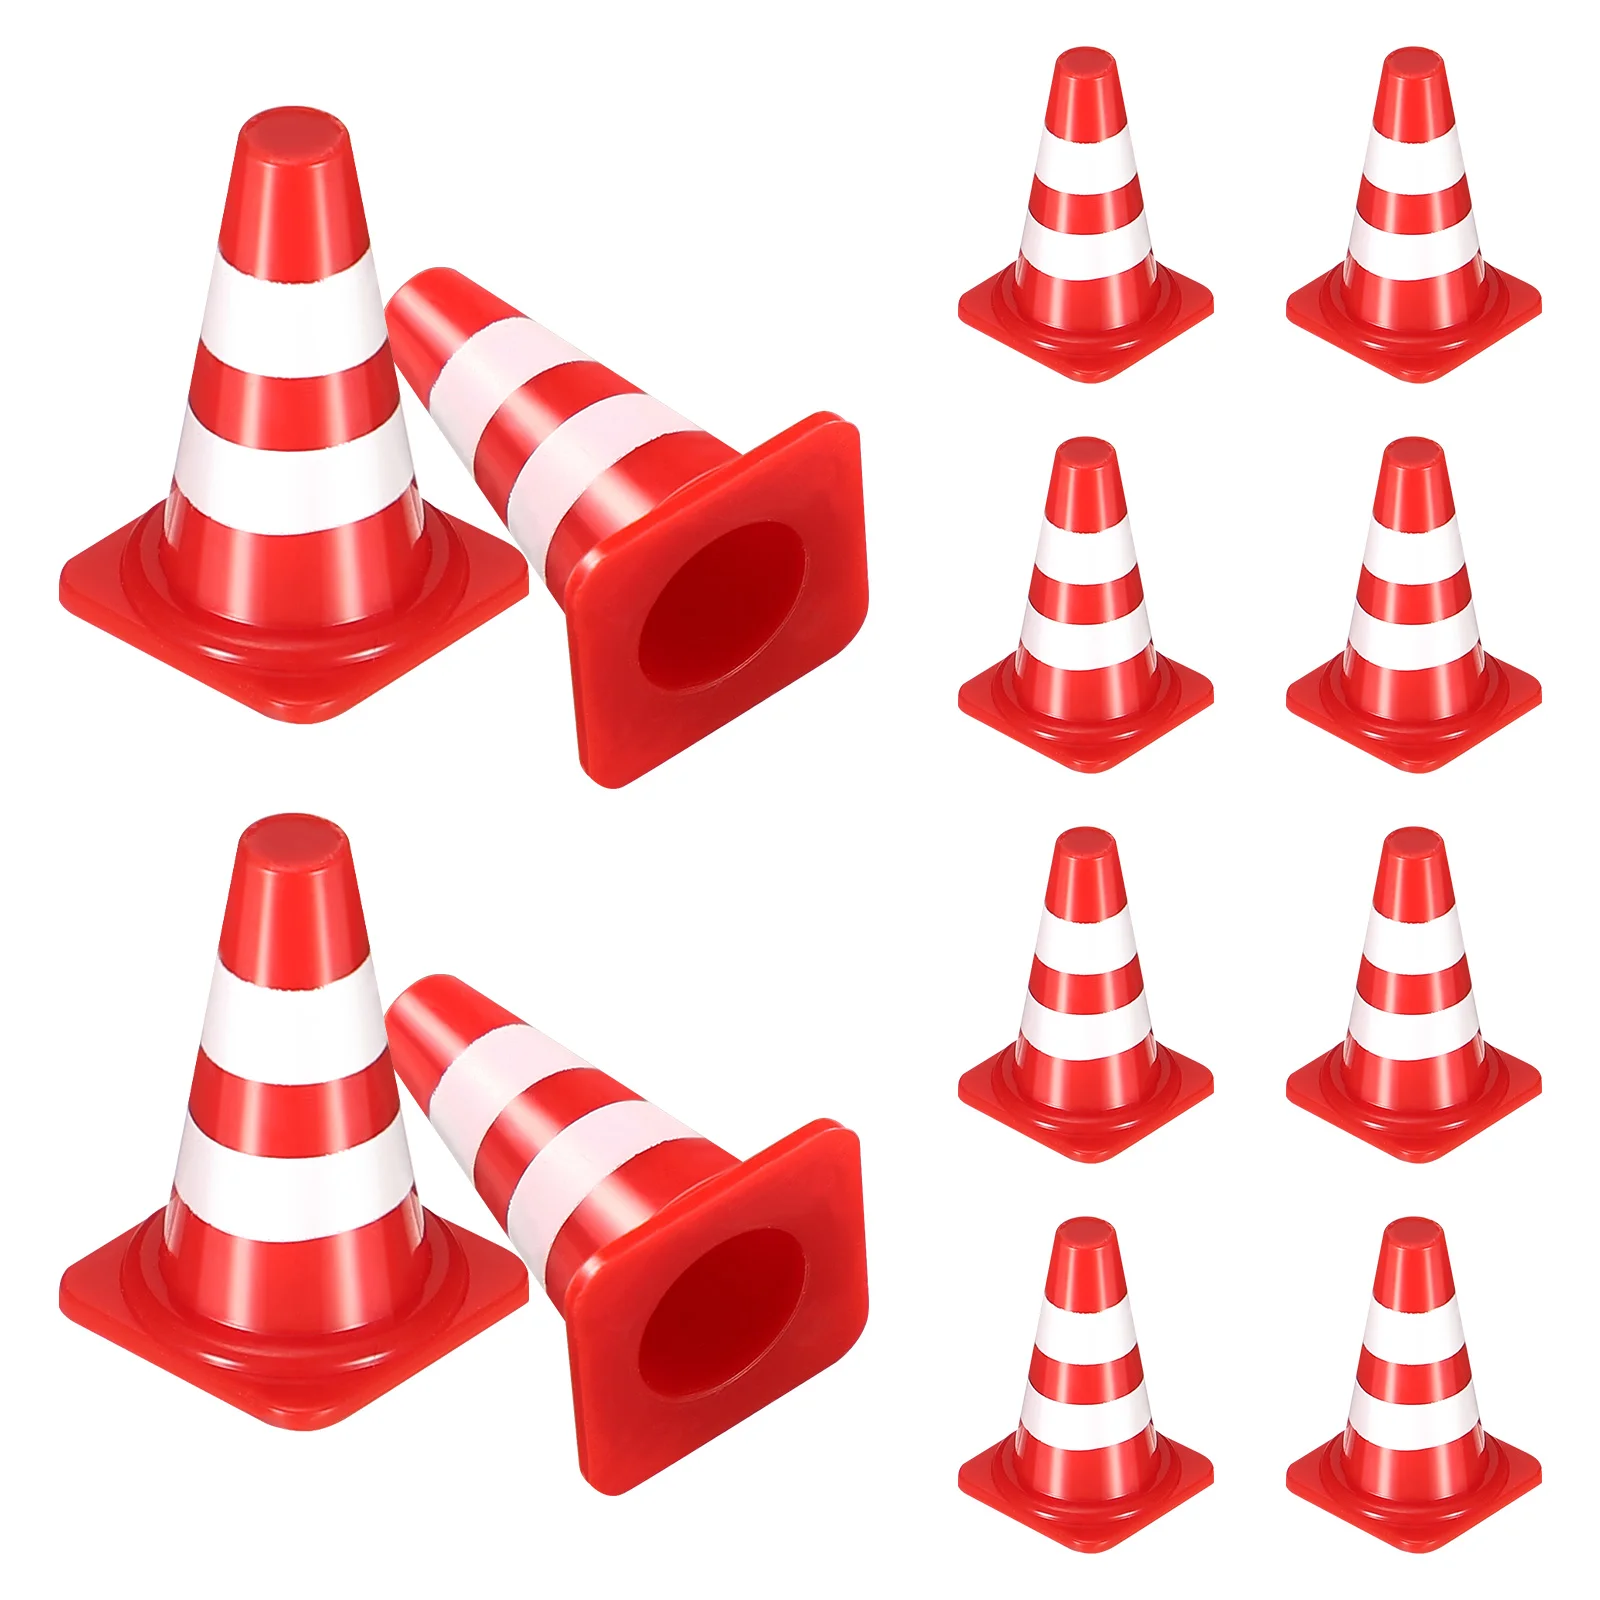 50 Pcs Roadblock Simulation Props Cones Mini Safety Kid Toys Traffic Miniature Parking